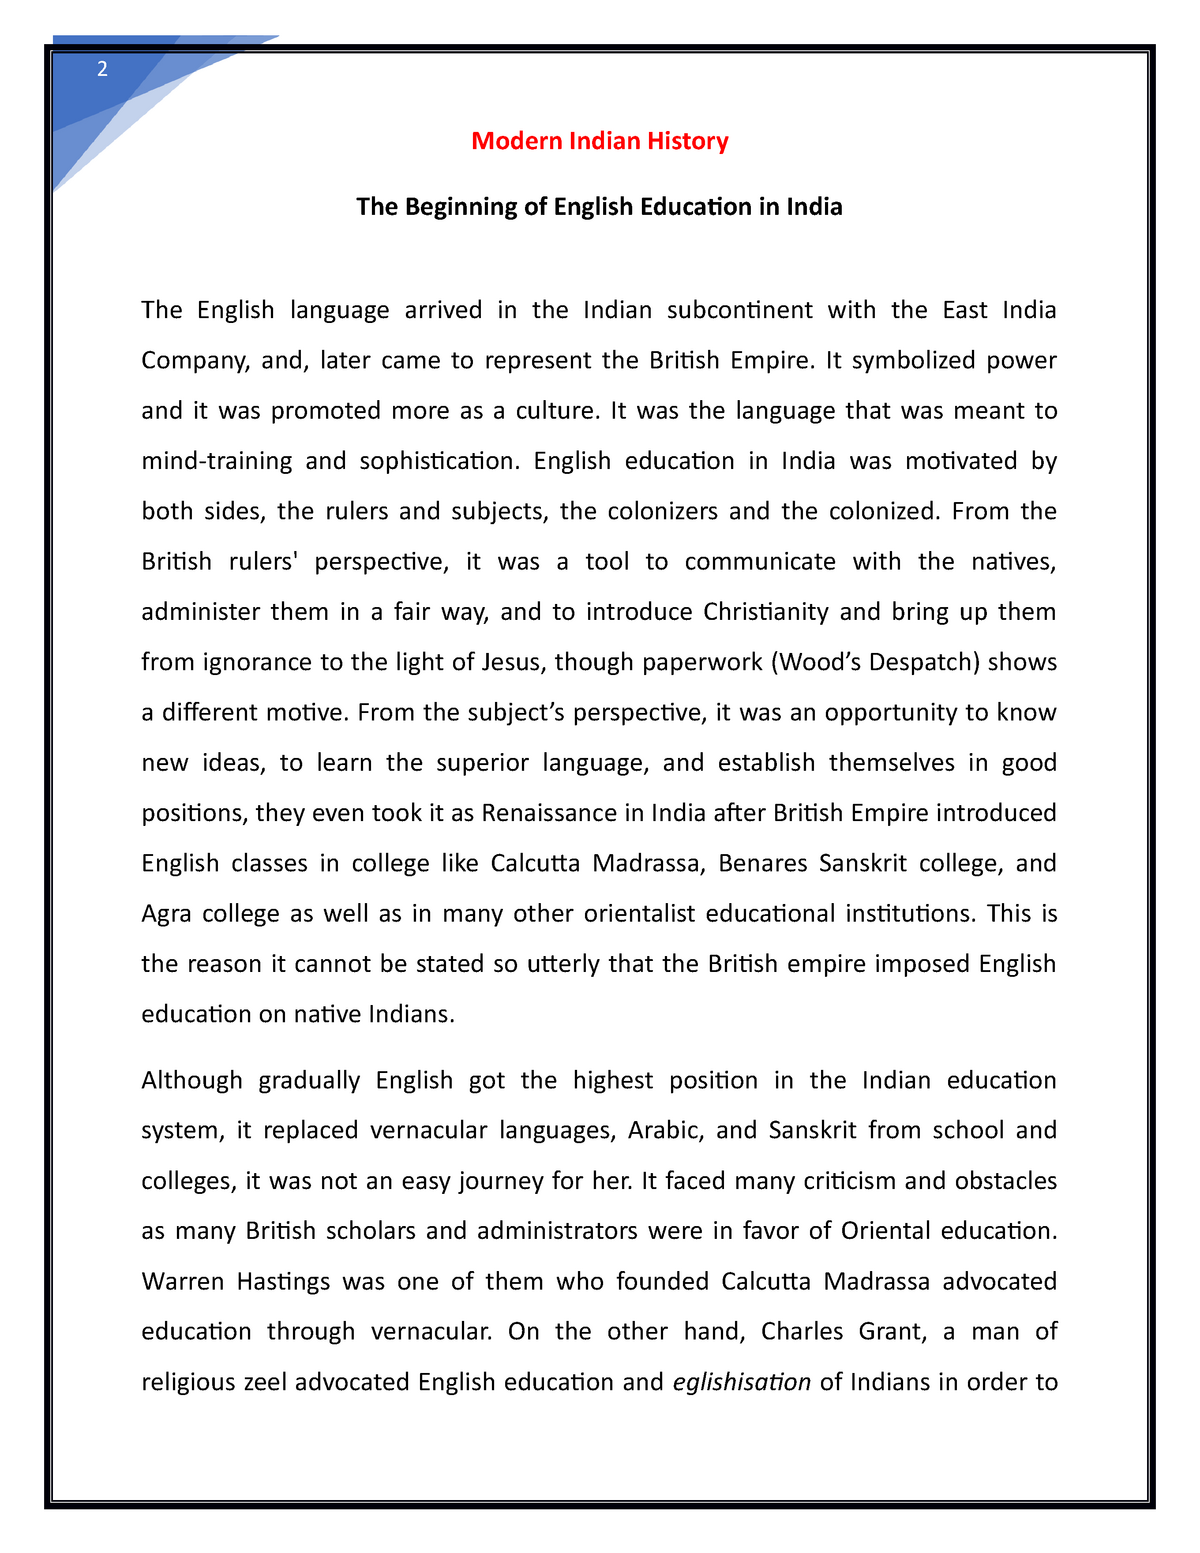 english education in india essay